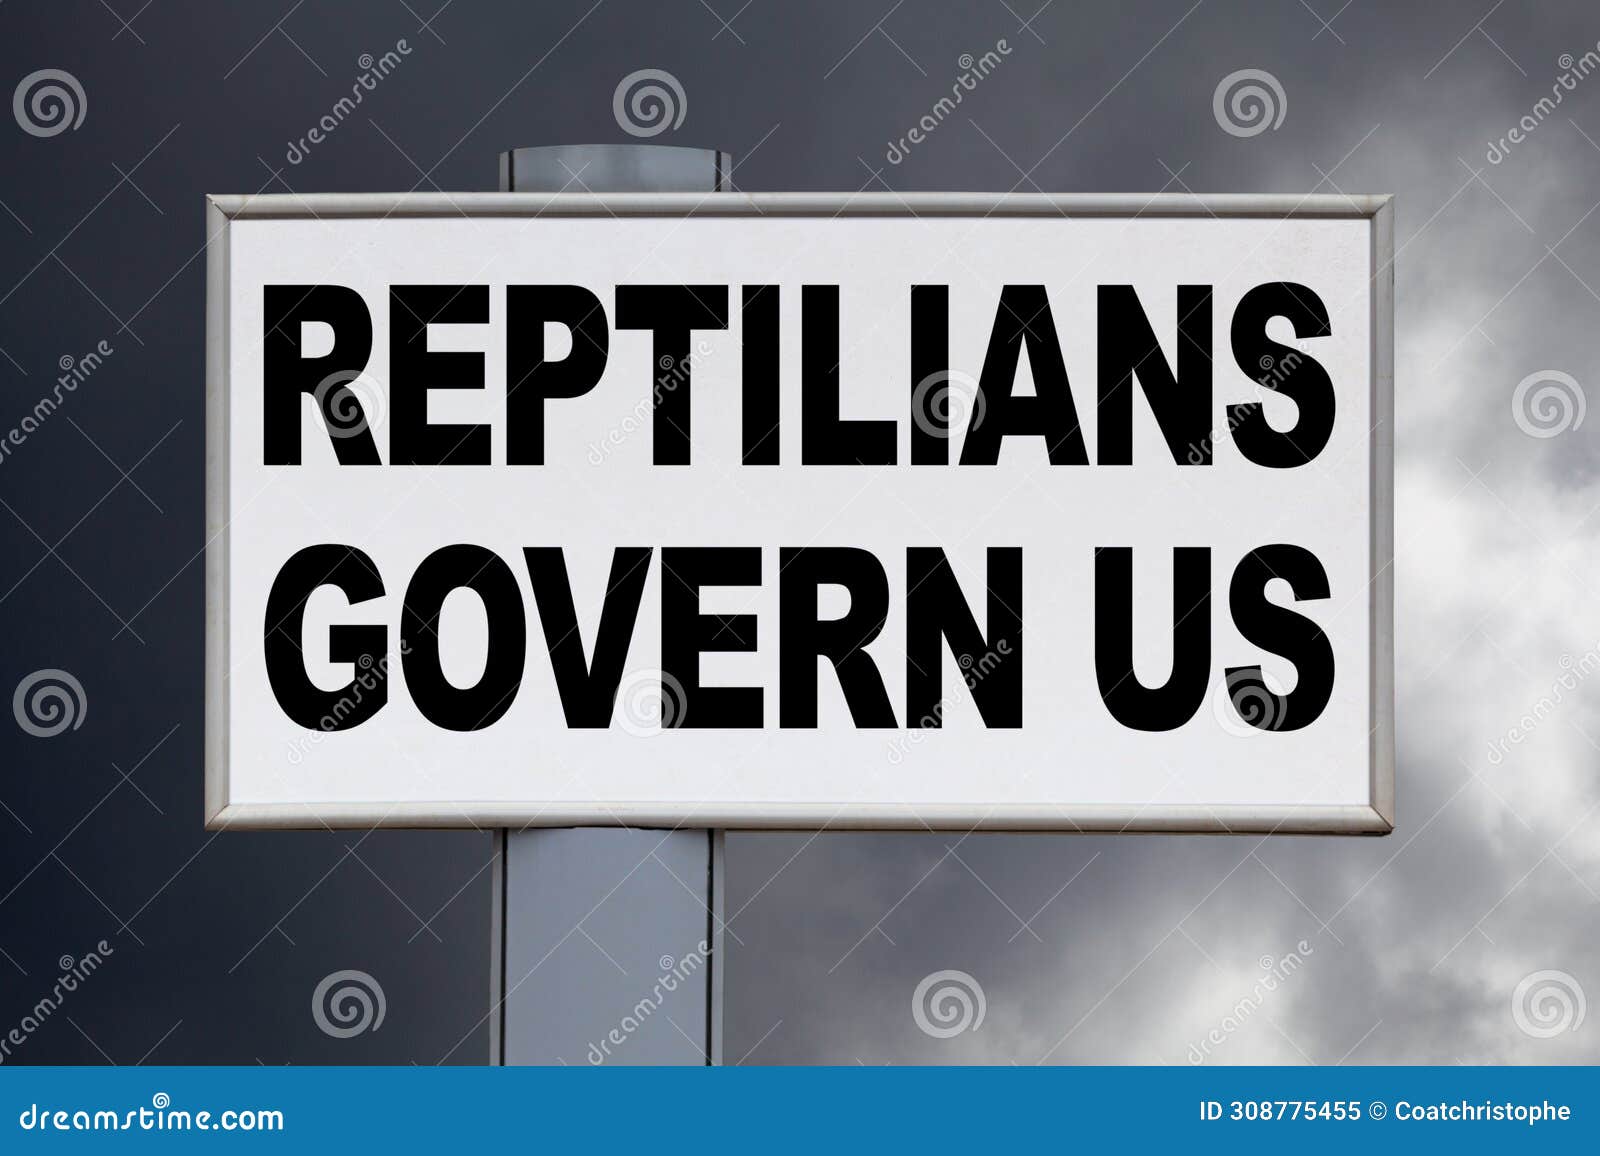 reptilians govern us - billboard